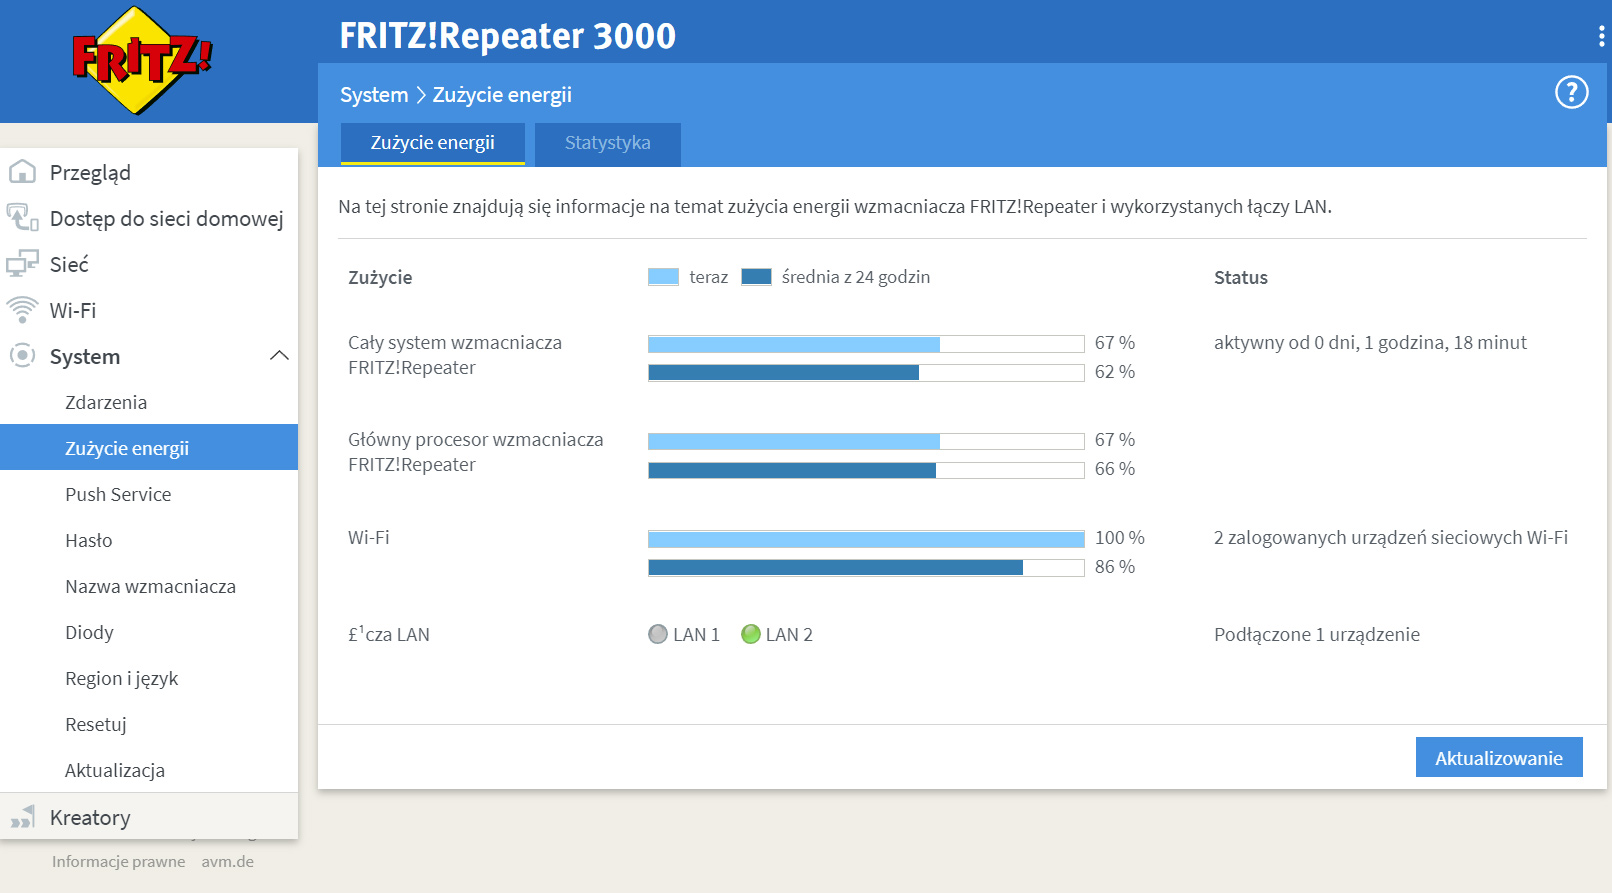 Fritz!Repeater 3000 WiFi Mesh